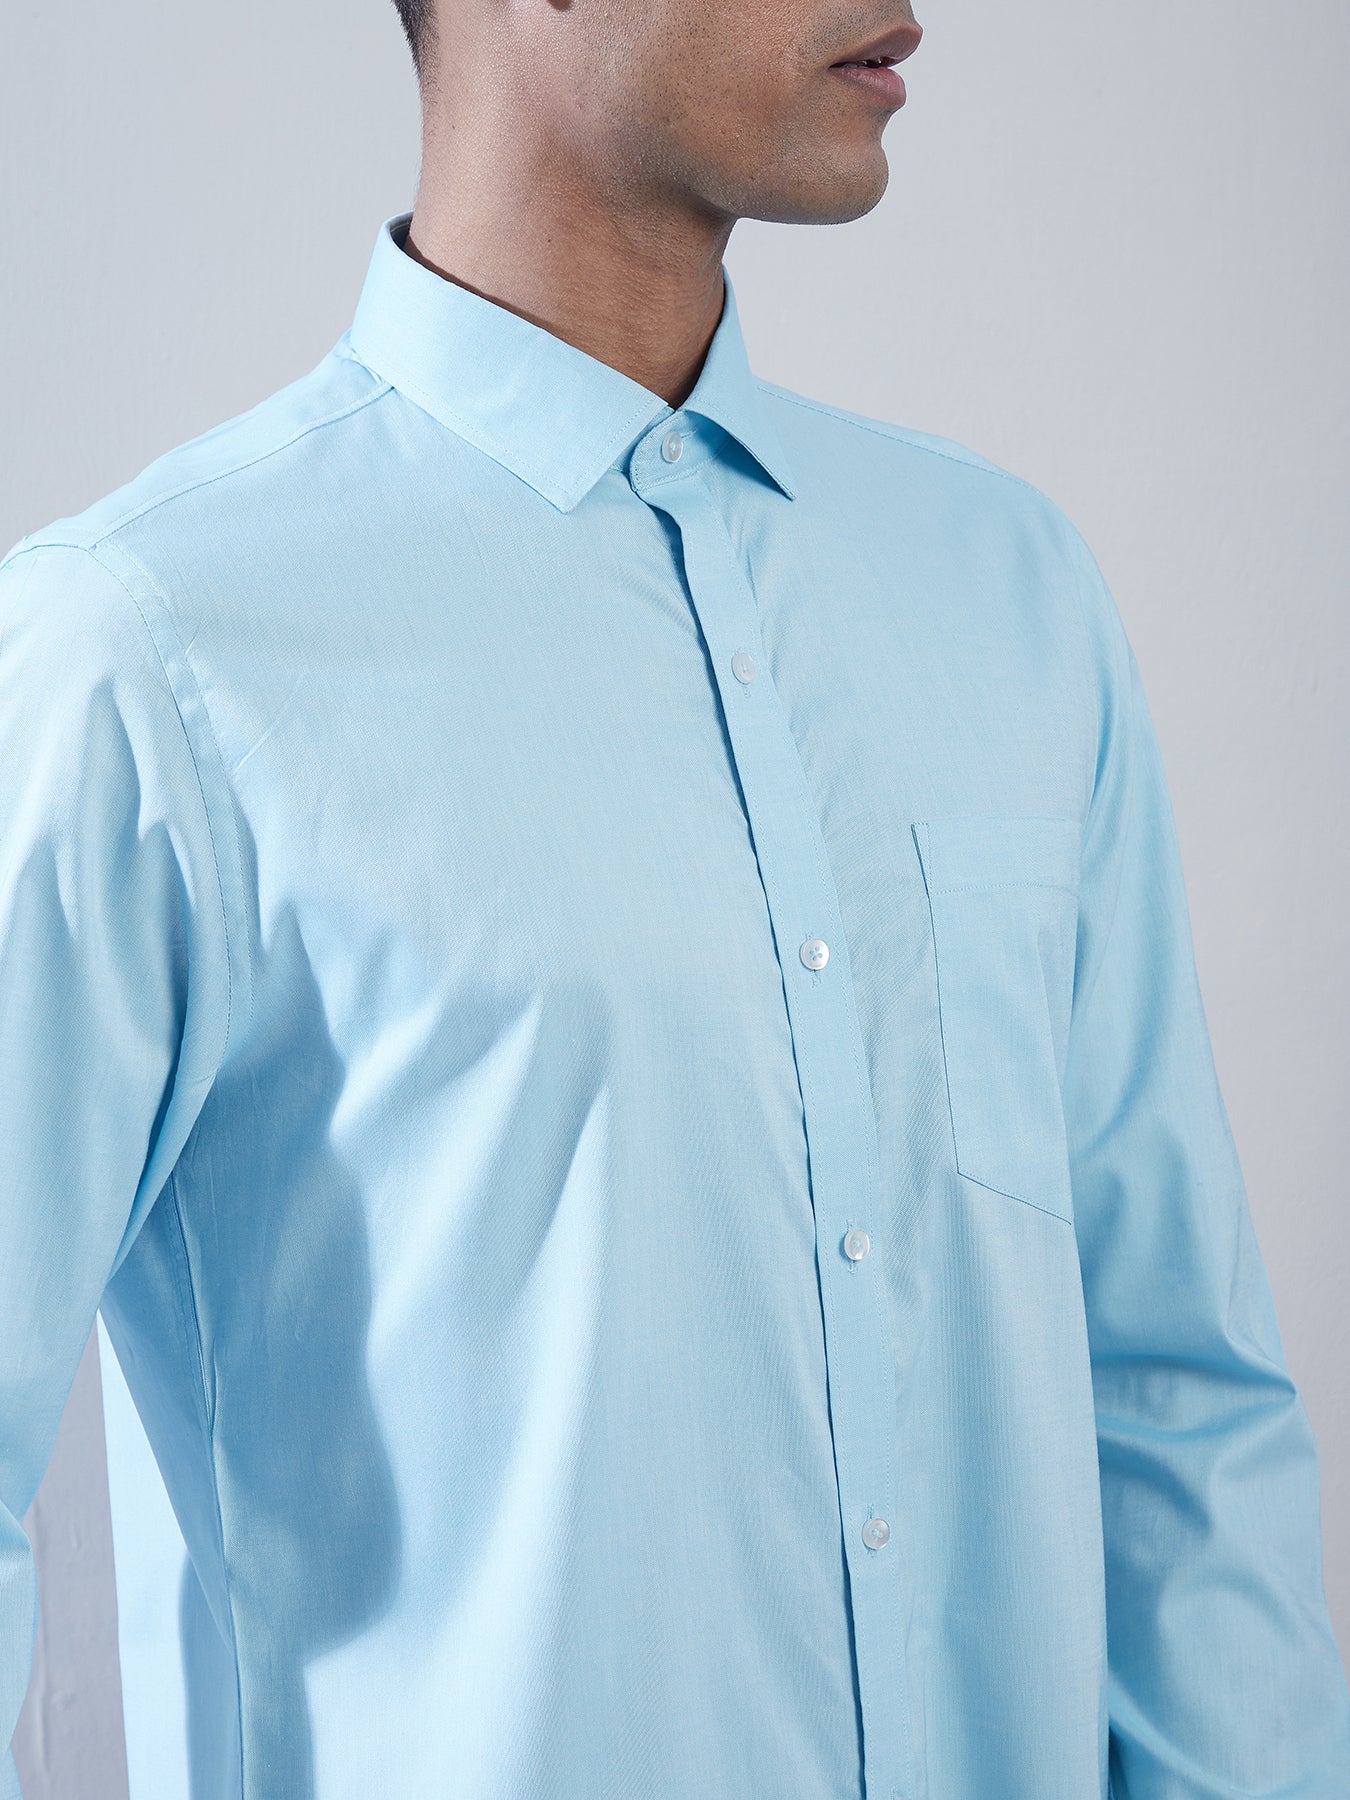 100% Cotton Turquoise Plain Slim Fit Full Sleeve Formal Shirt